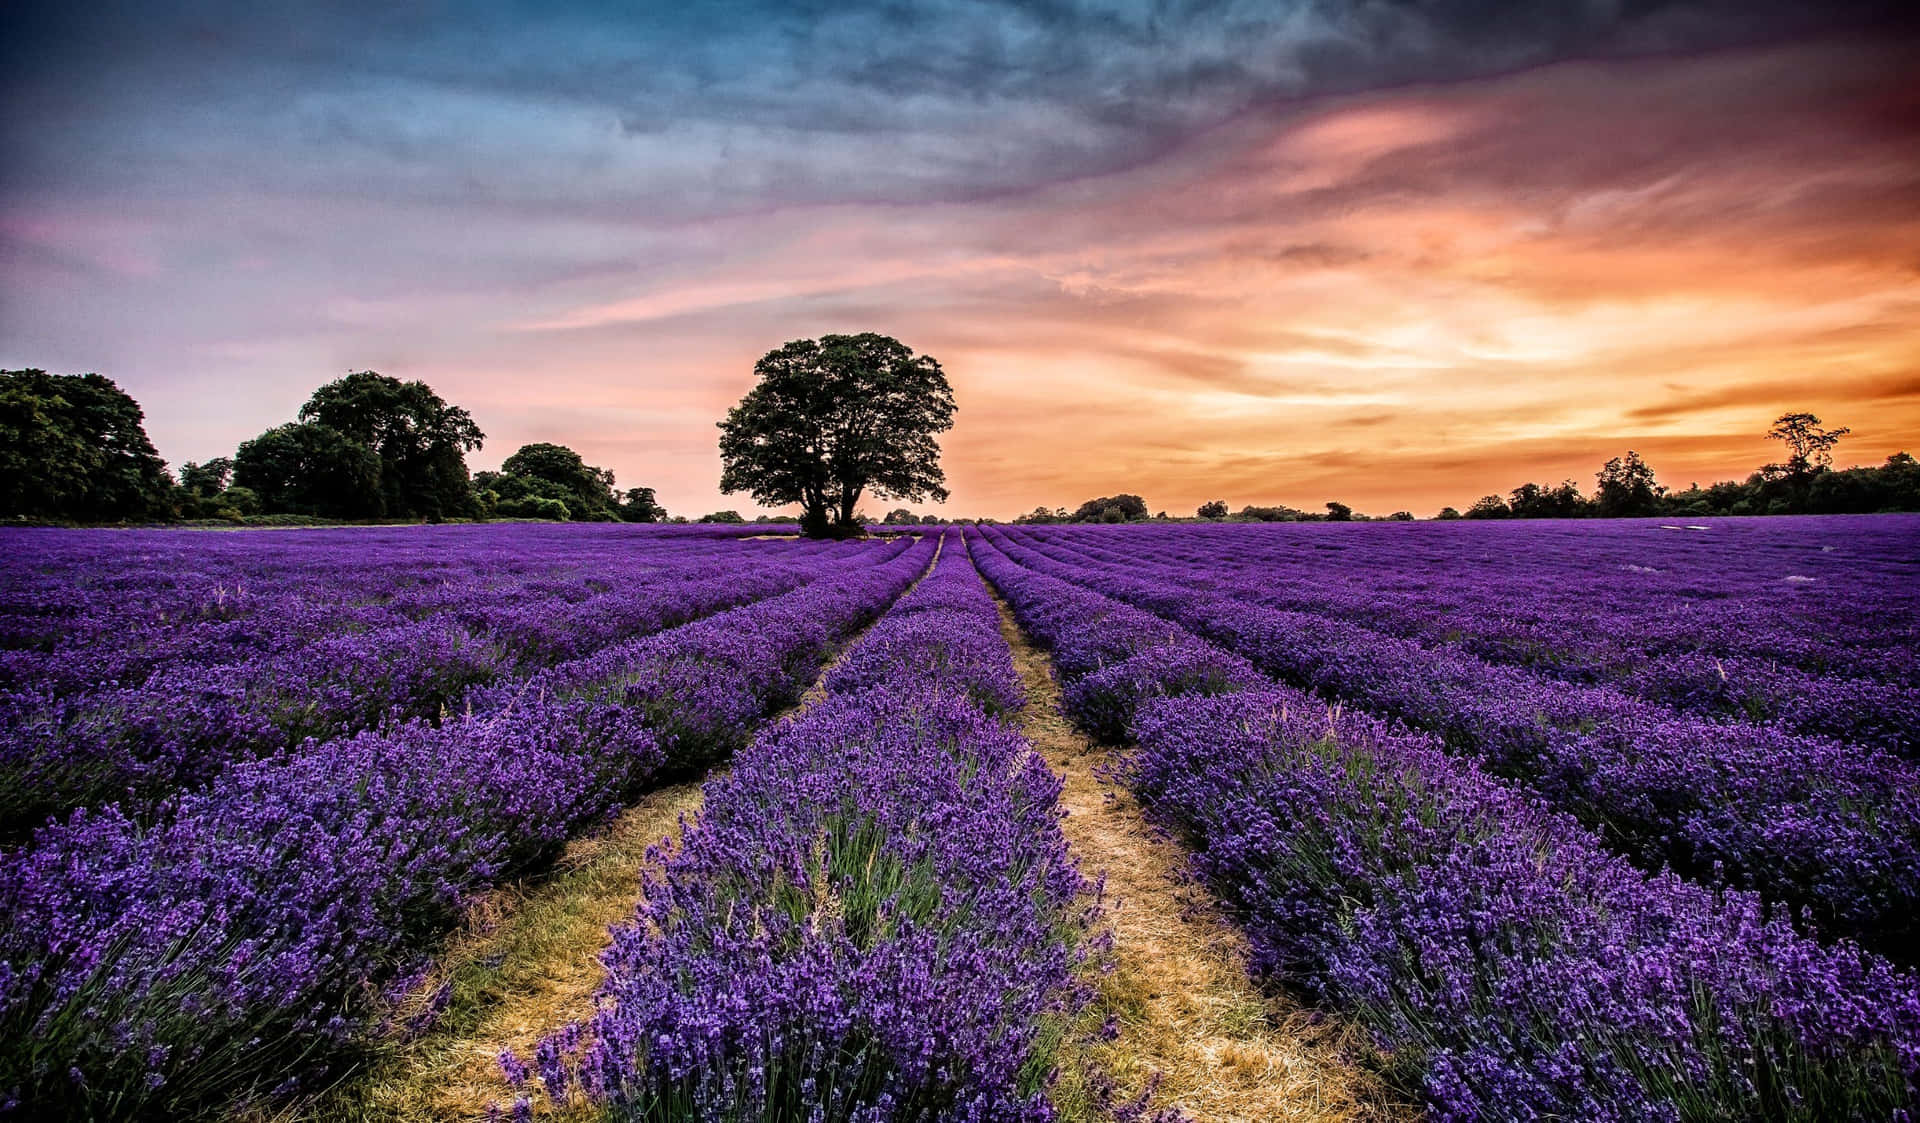 Enjoy the beauty of a Lavender Field